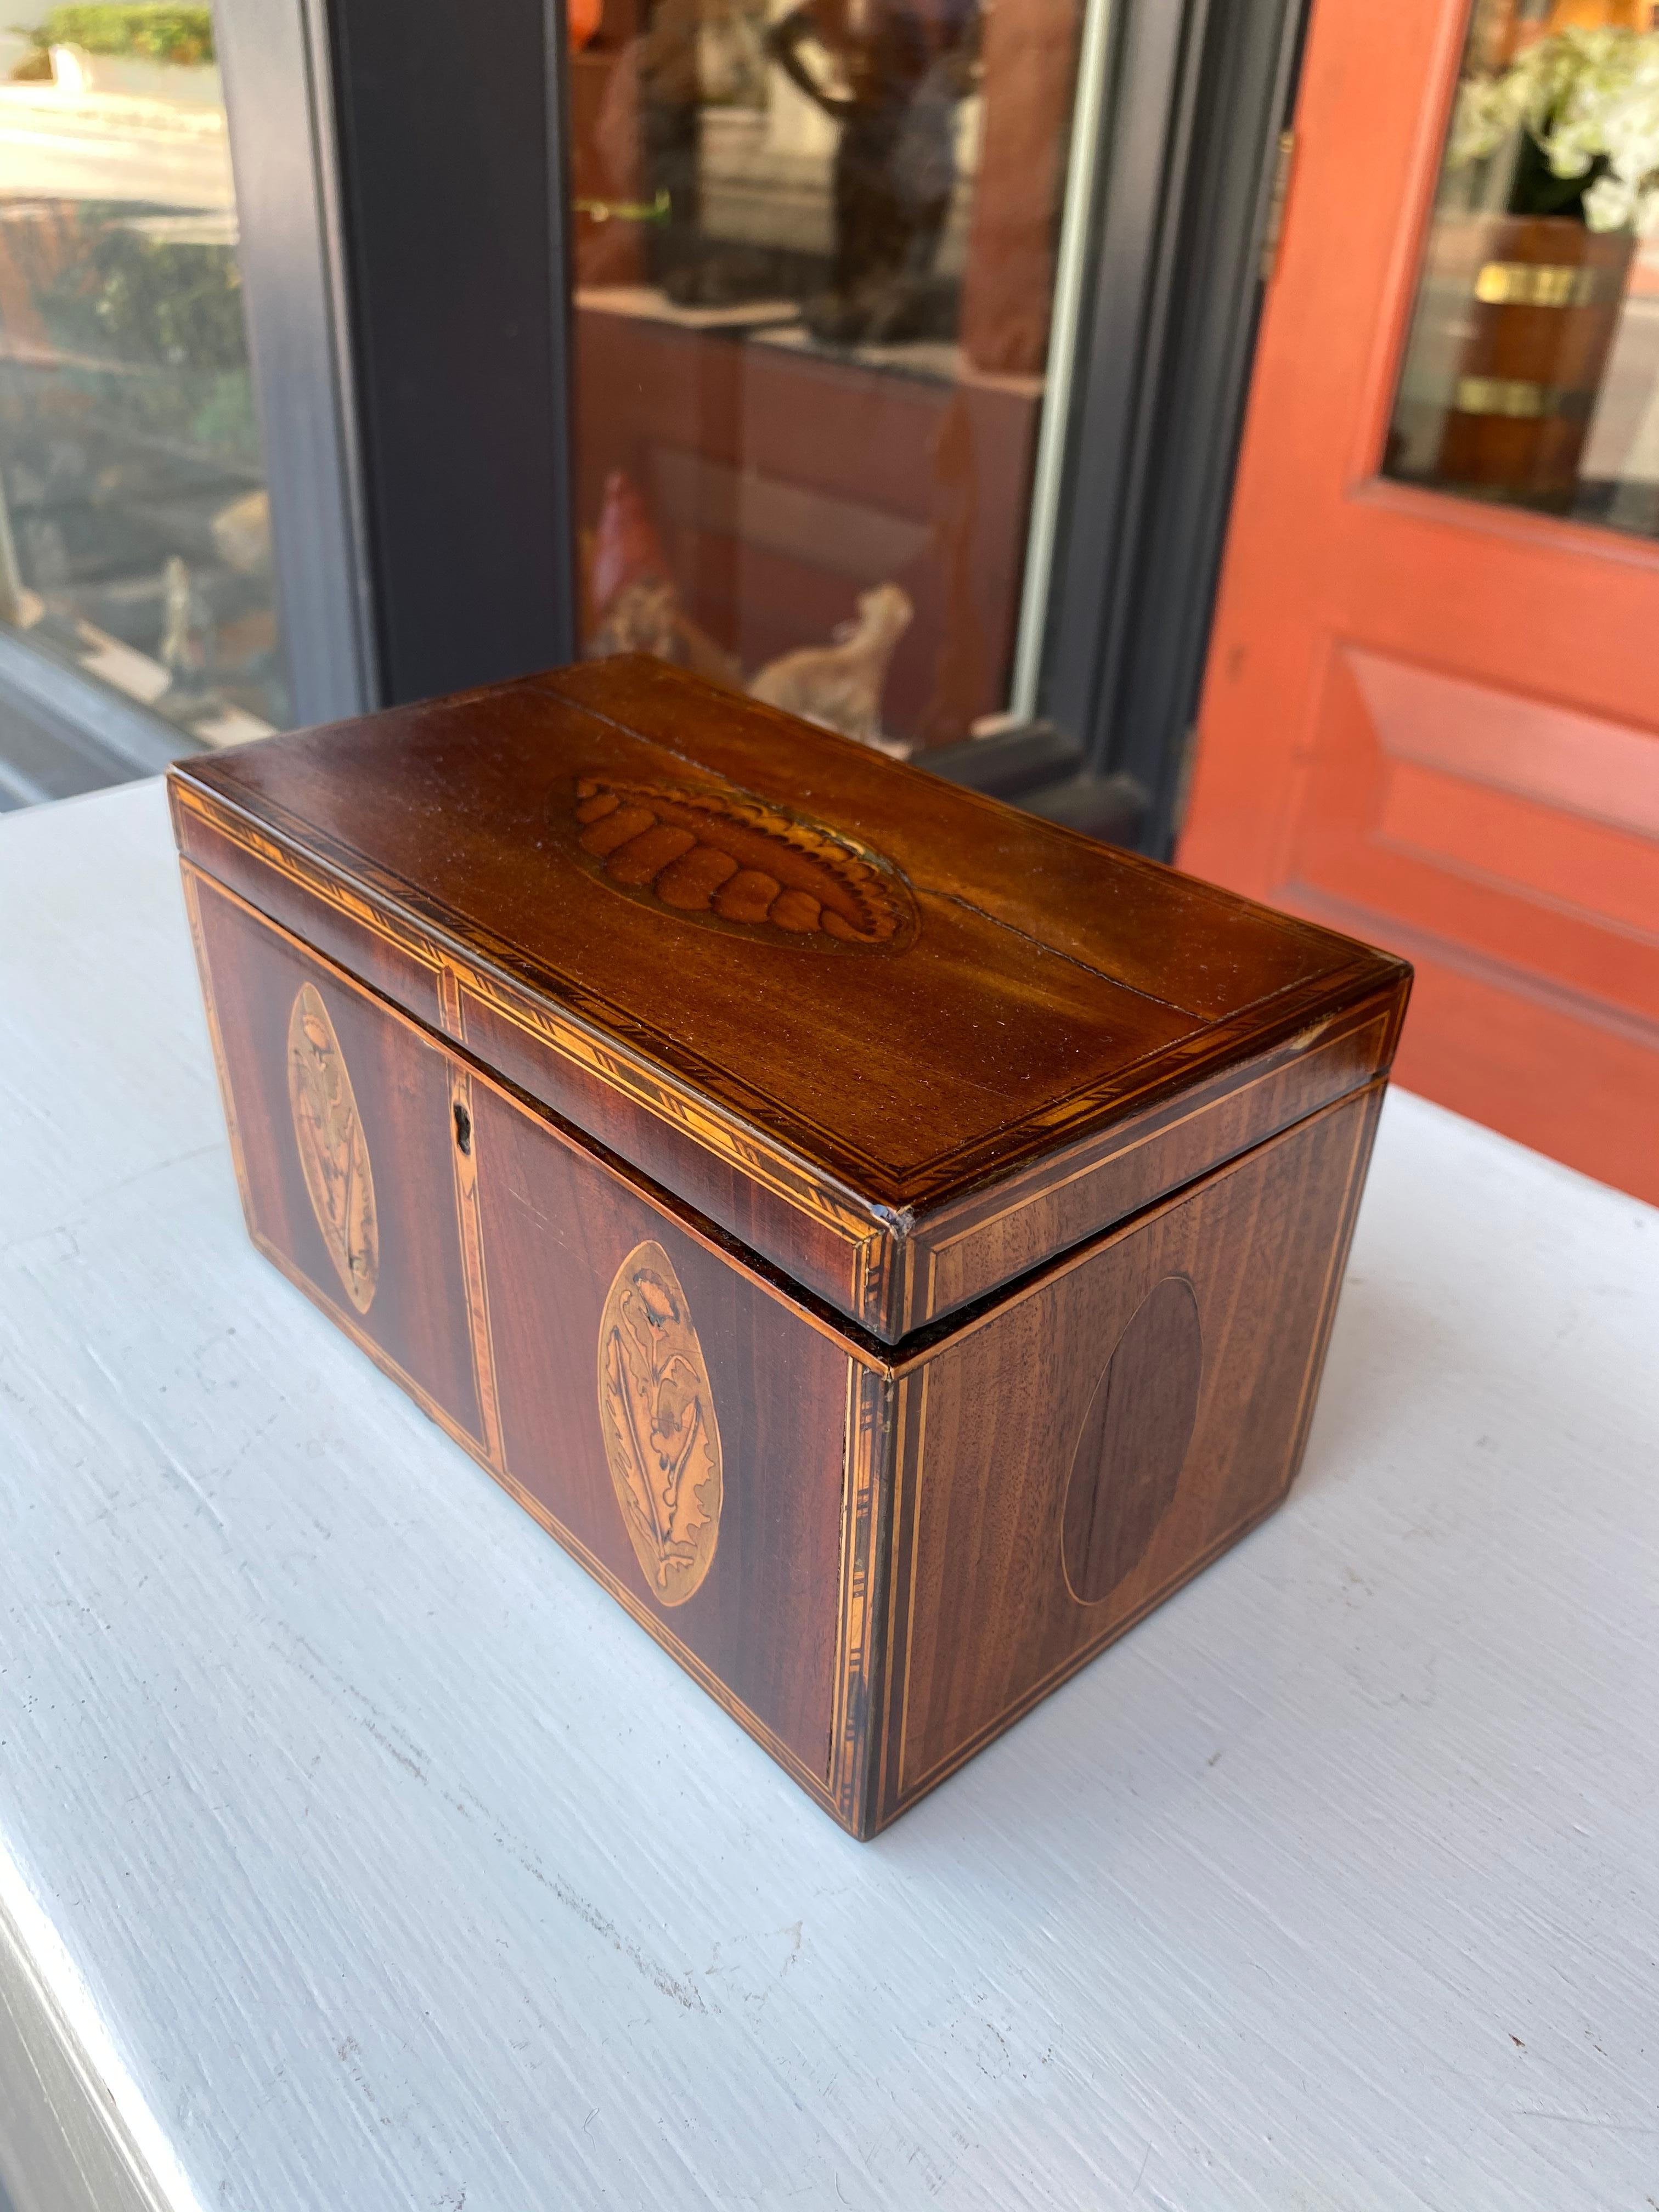 North American Mahogany and satin wood inlaid tea caddy with shell motif